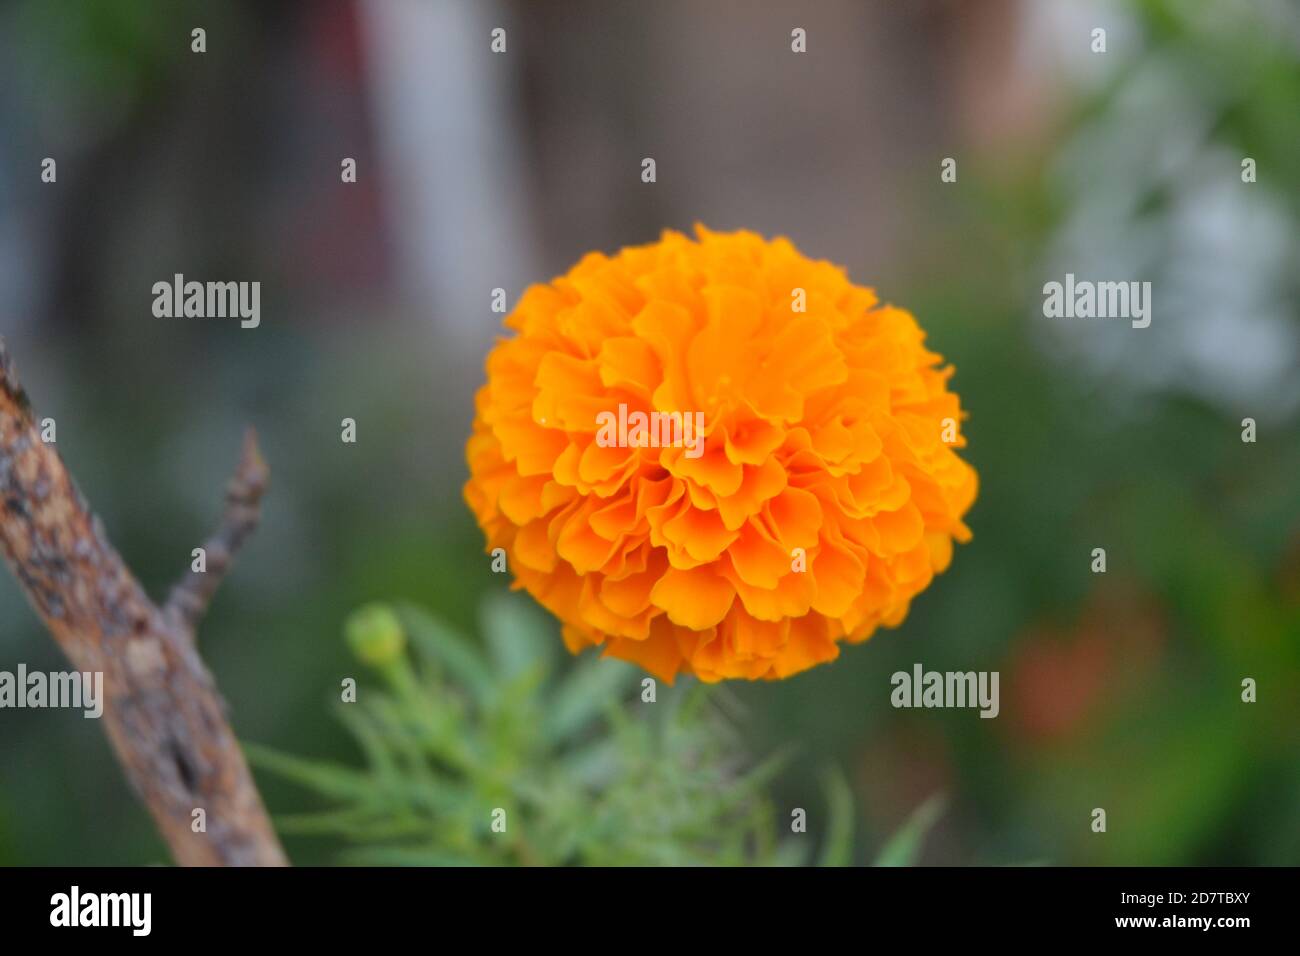 Marigold flowers. Image location: Kathmandu, Nepal Stock Photo